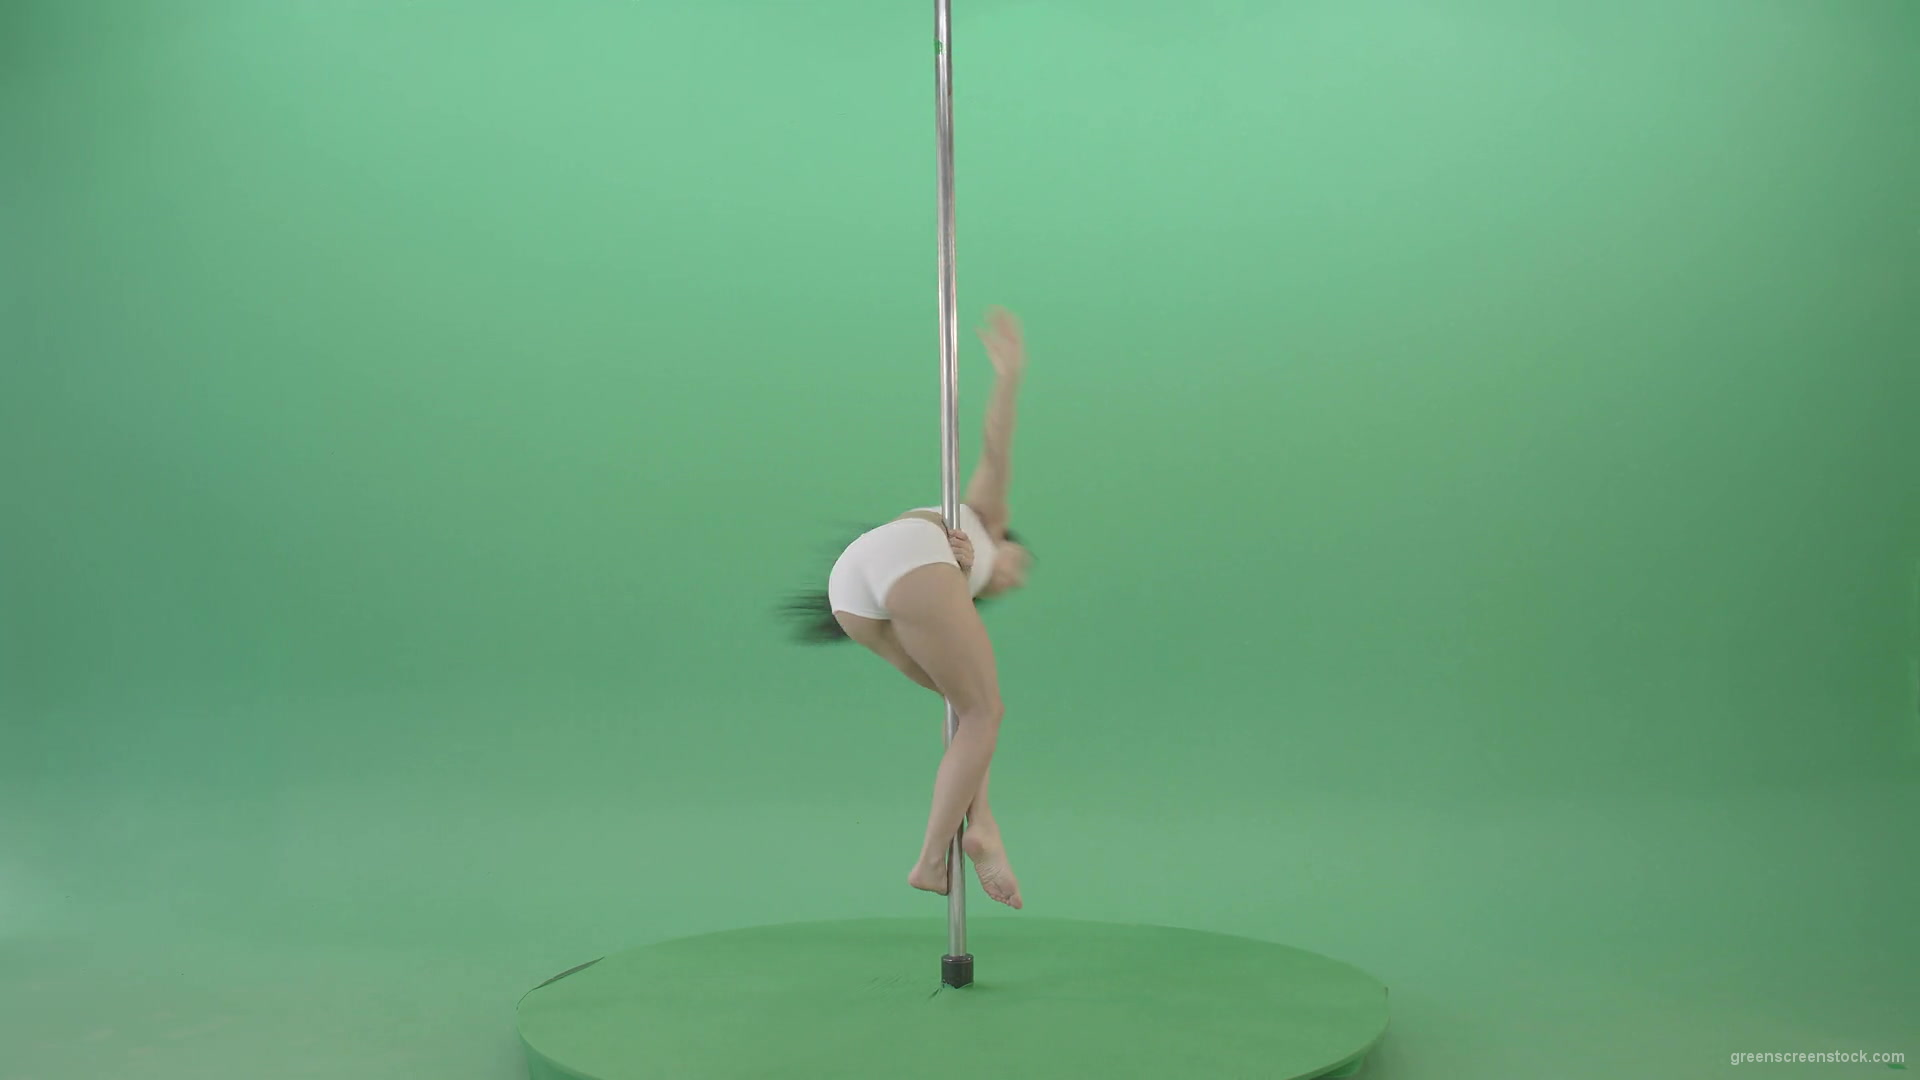 Pole-dance-trainer-girl-has-a-sport-flight-on-green-screen-4K-Video-Footage-1920_007 Green Screen Stock